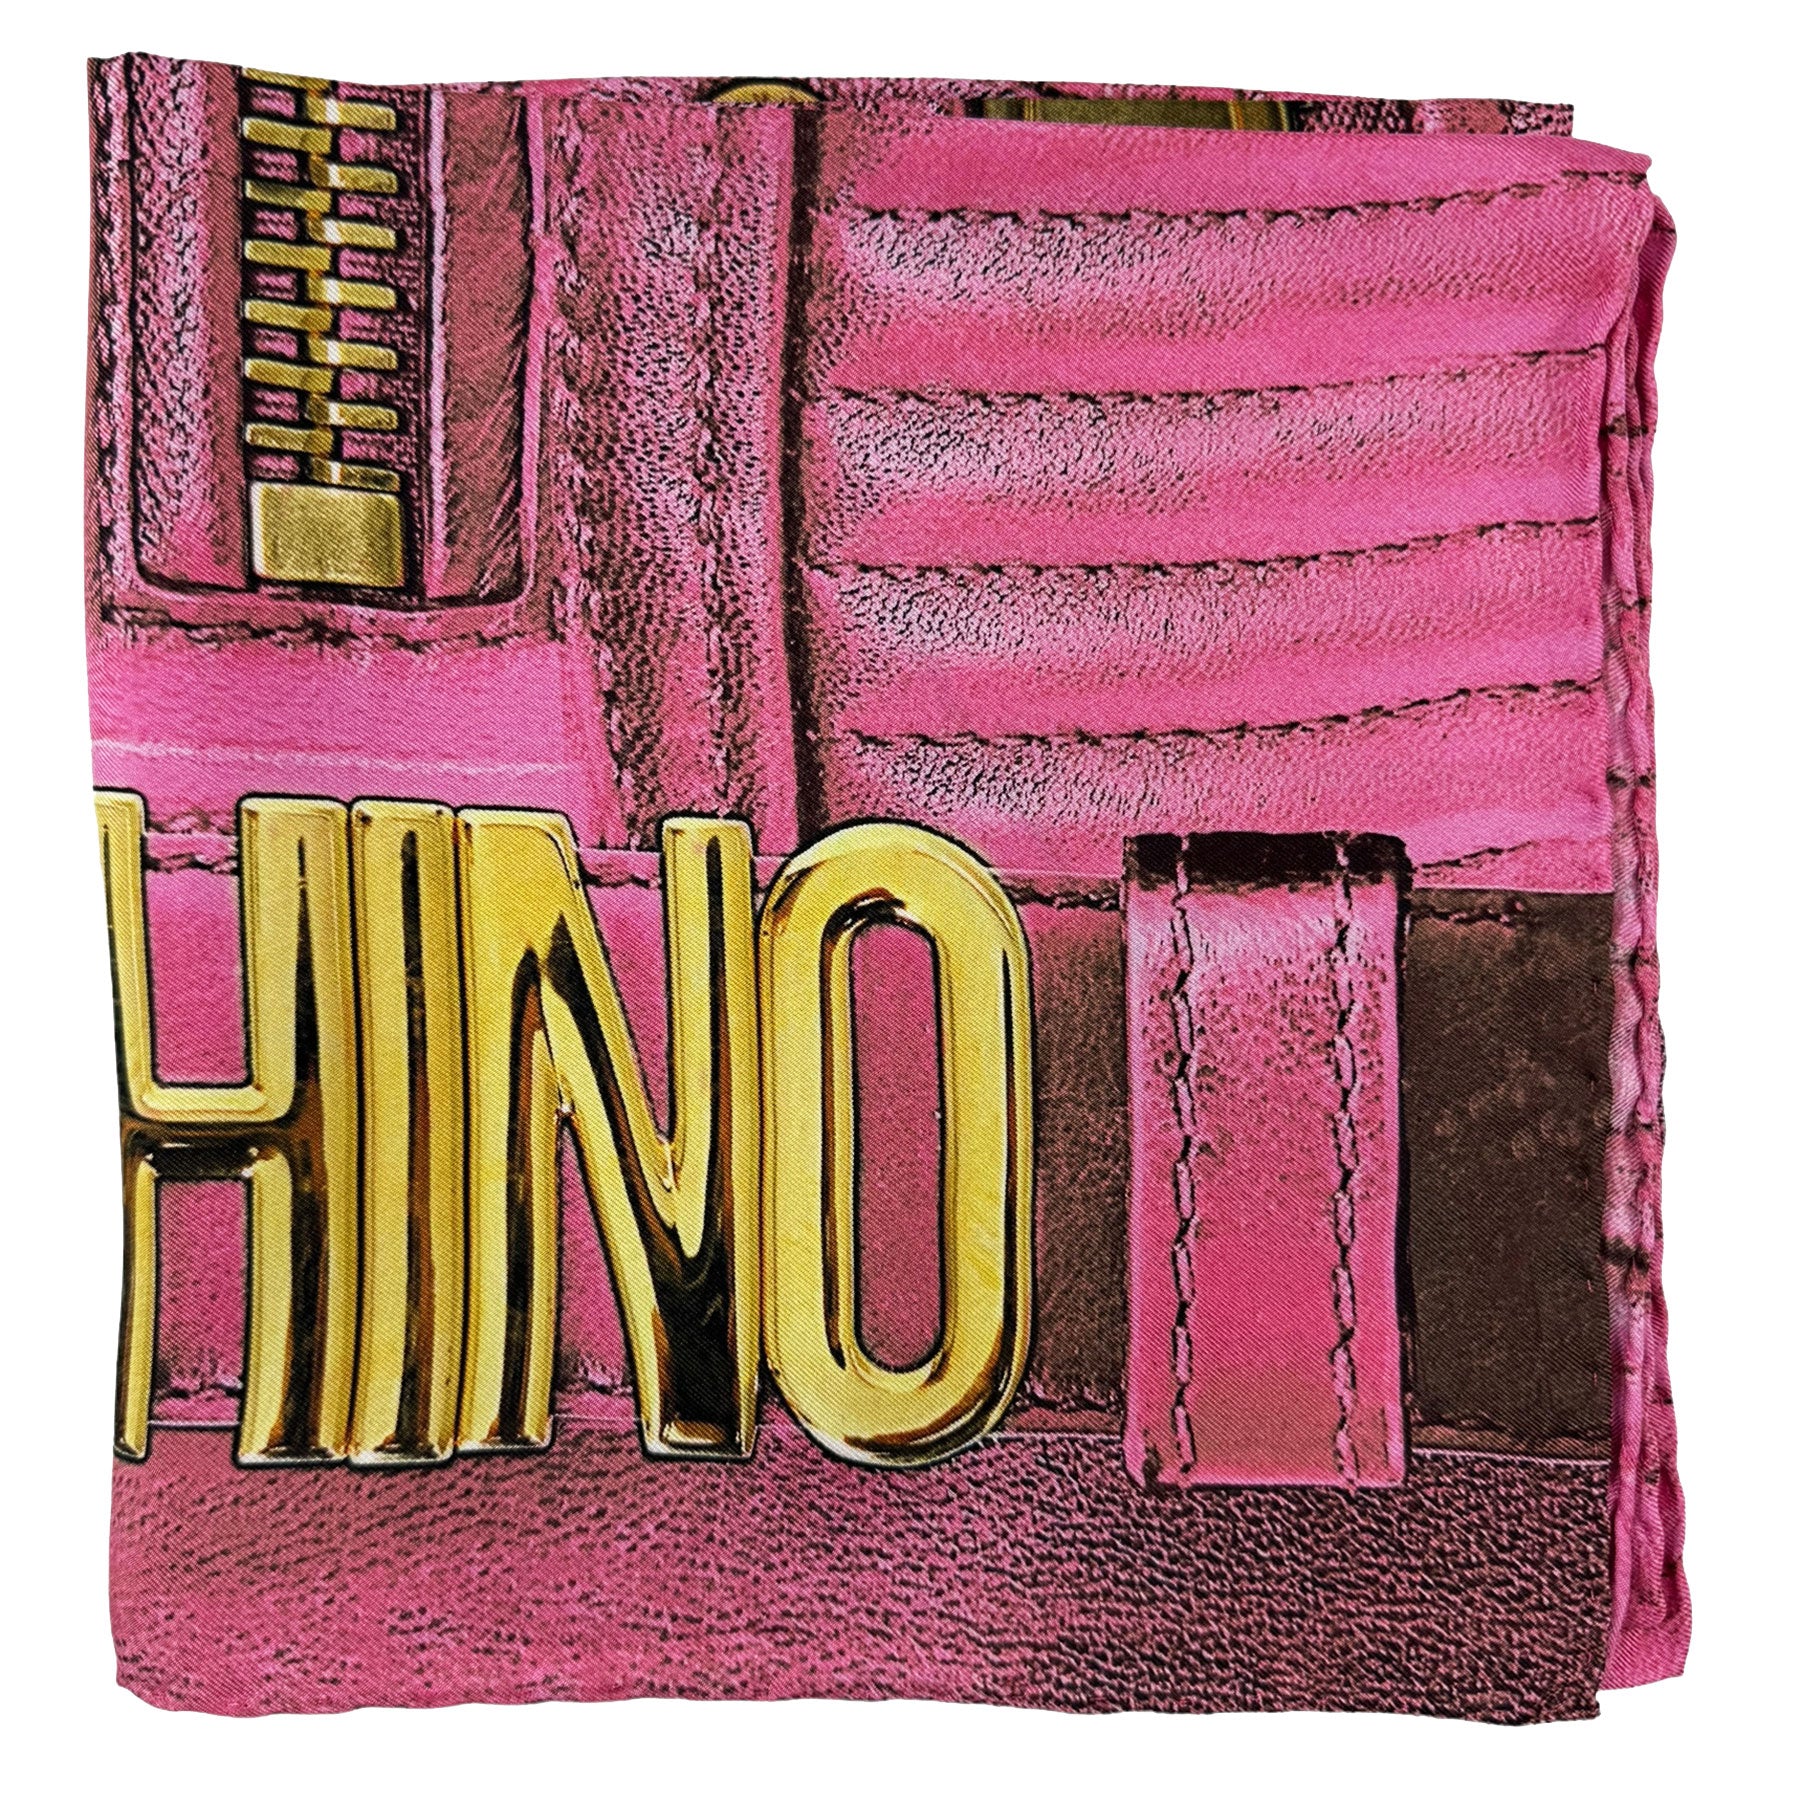 Moschino Scarf Pink Leather Jacket - Large Square Silk Foulard